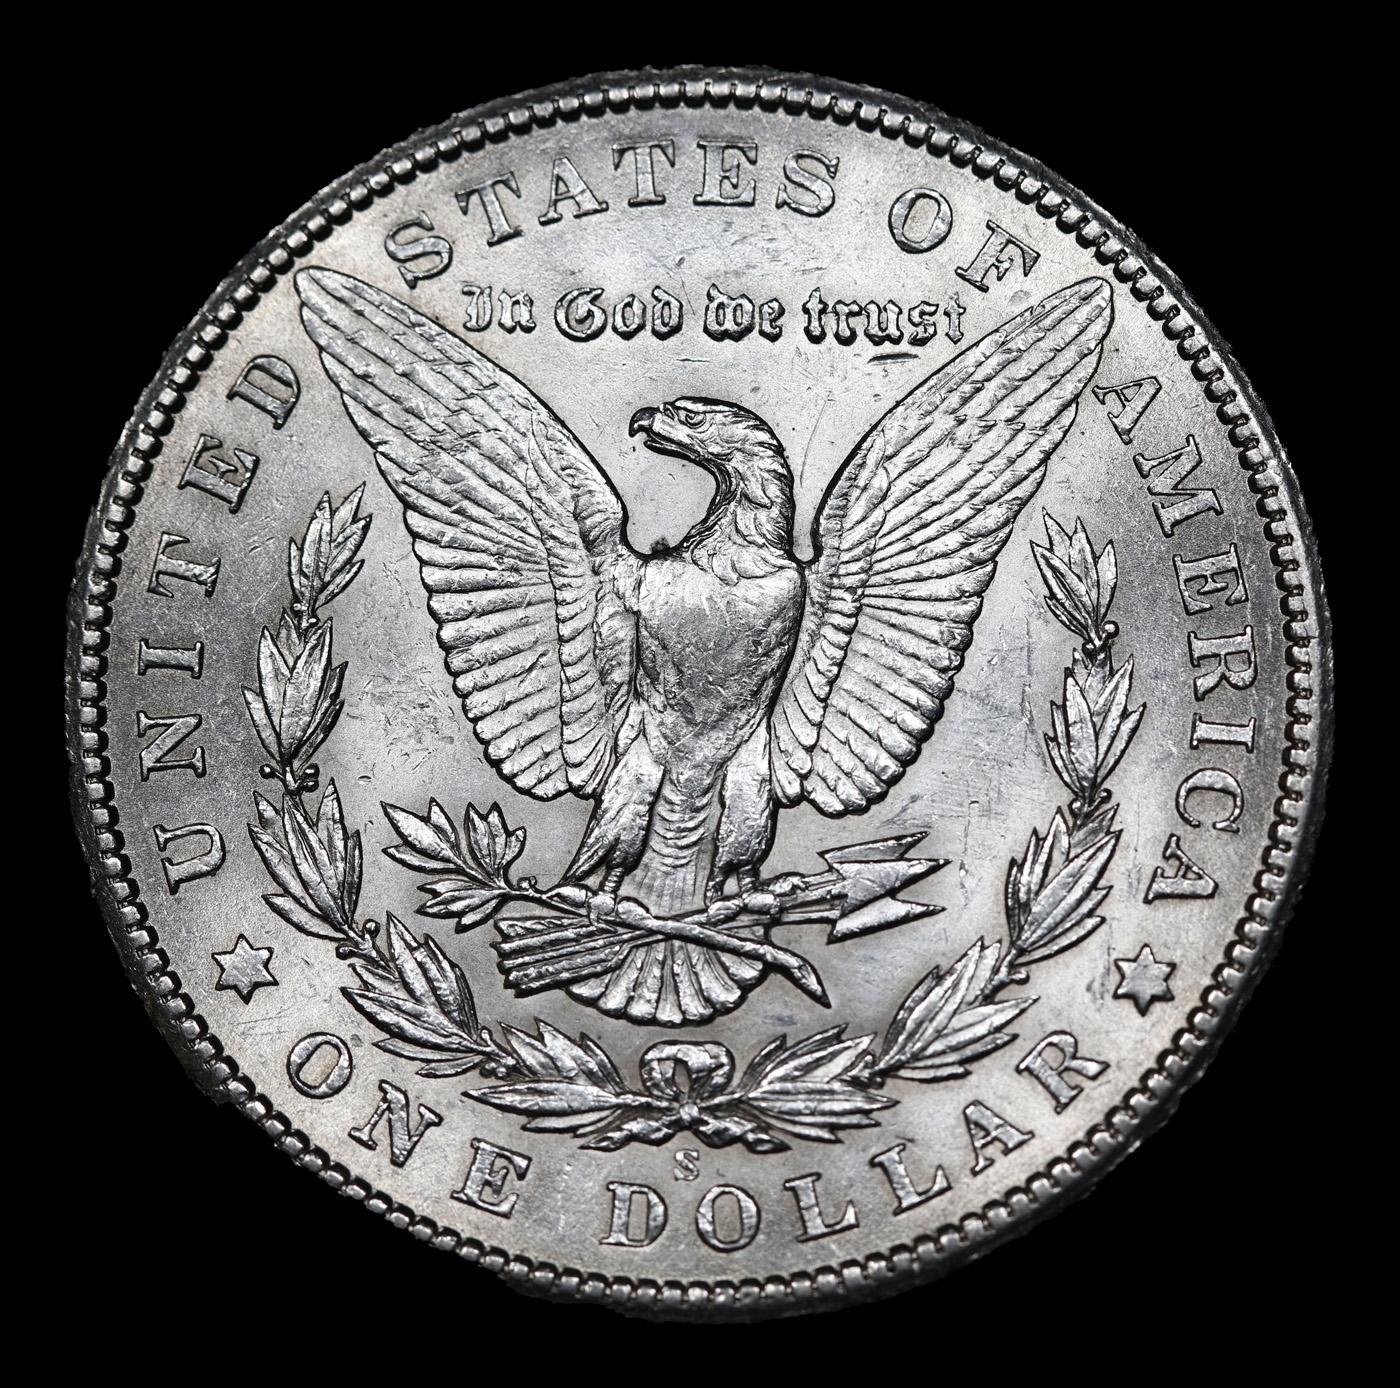 ***Auction Highlight*** 1902-s Morgan Dollar 1 Graded ms63 By SEGS (fc)